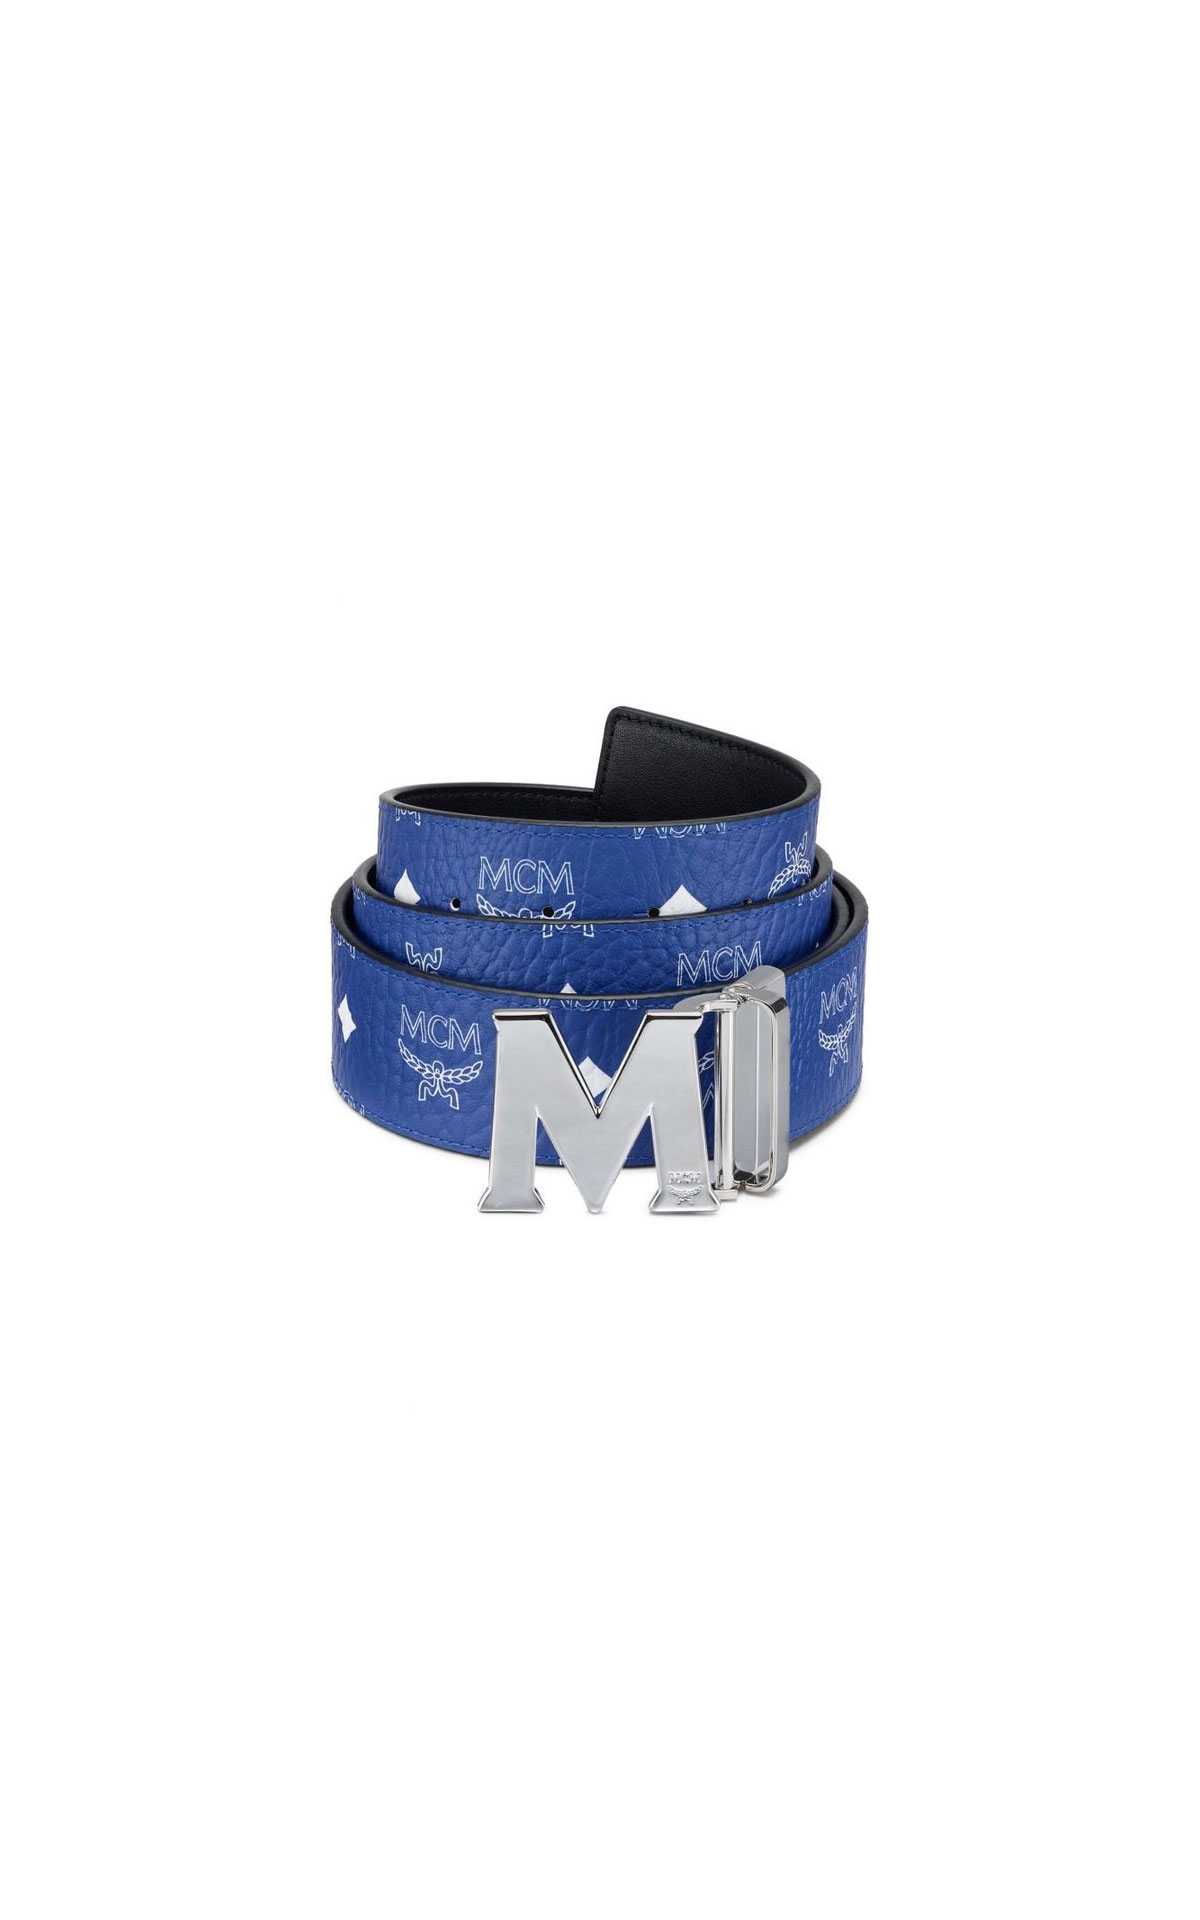 MCM Reversible belt from Bicester Village